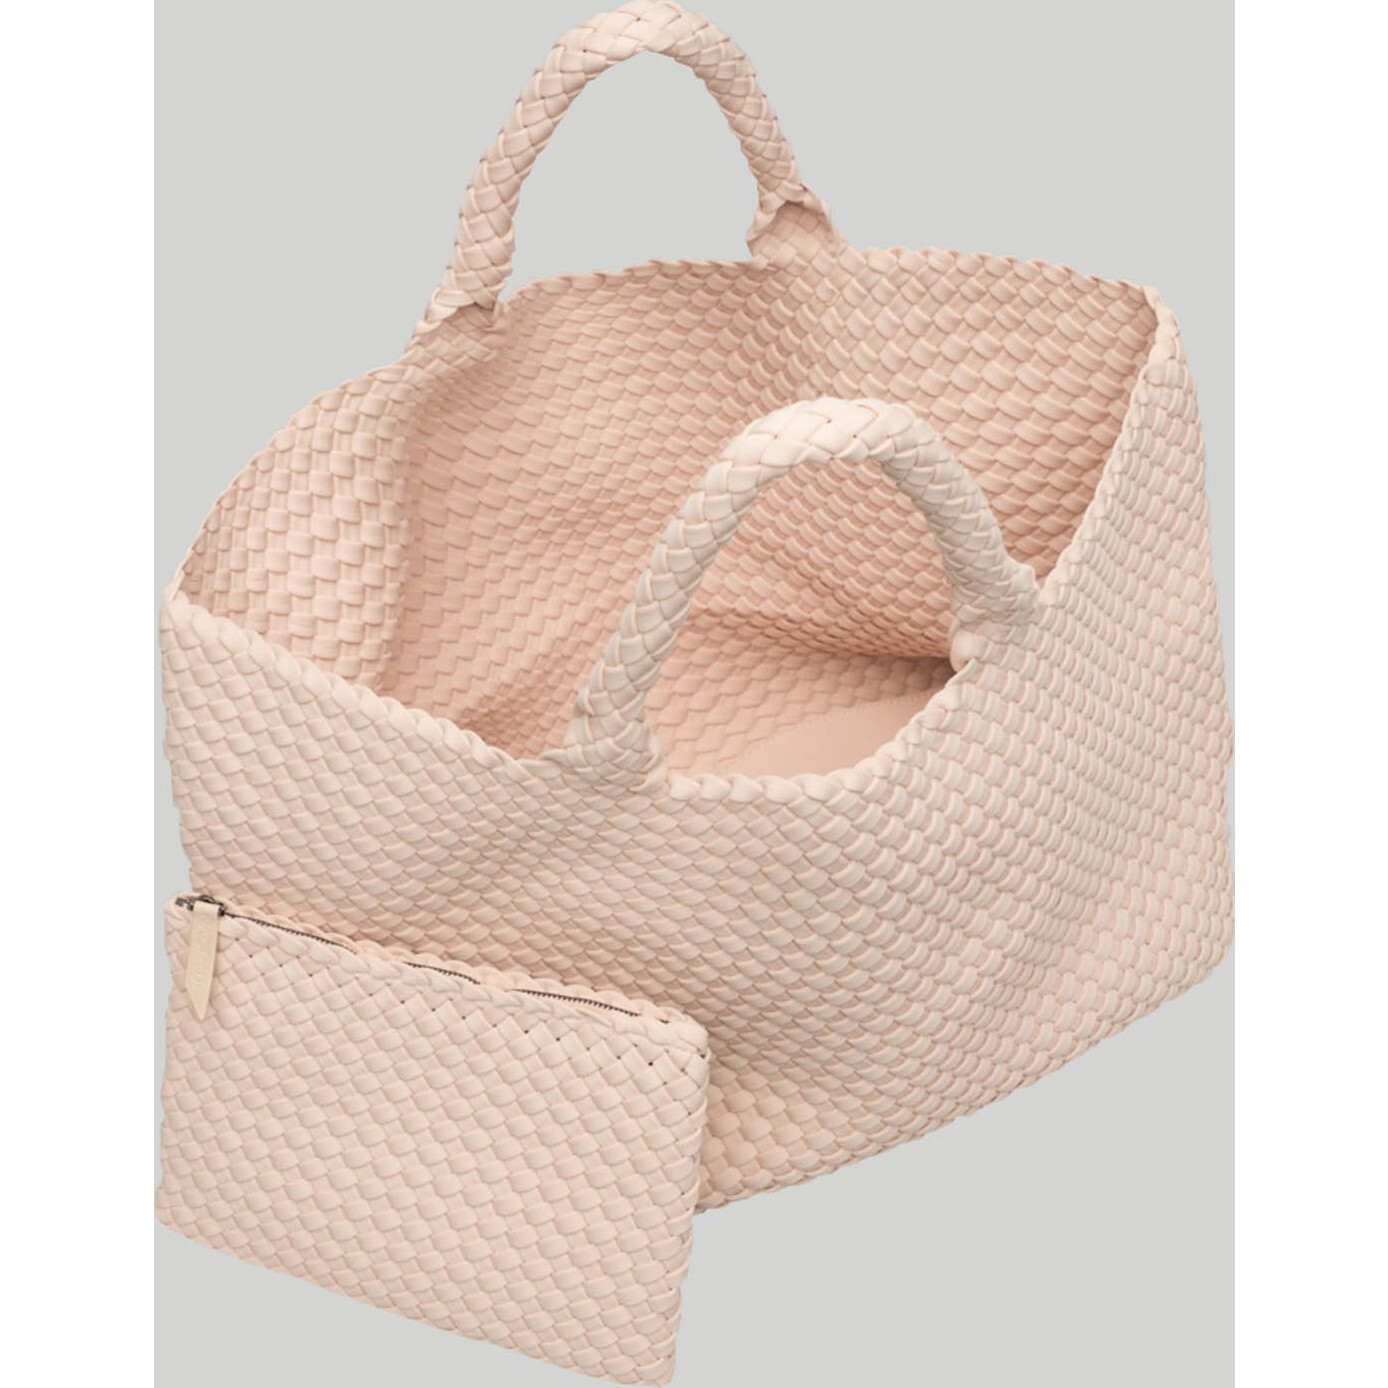 St. Barths – Naghedi NYC  Fashion bags, Bags, Metallic totes